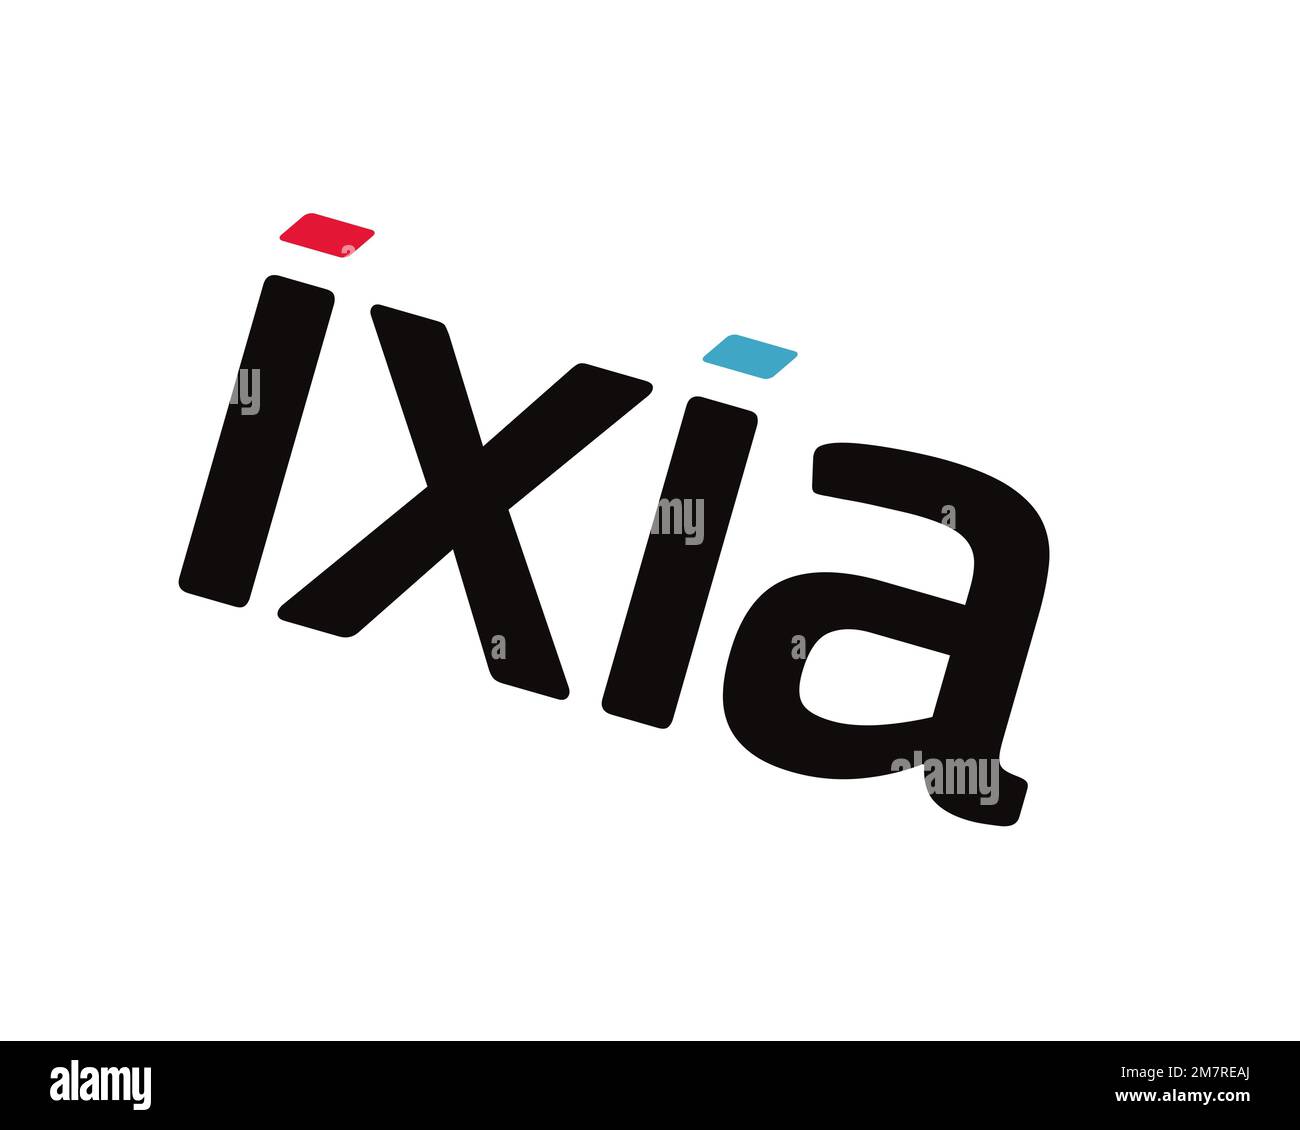 Ixia company, rotated logo, white background B Stock Photo